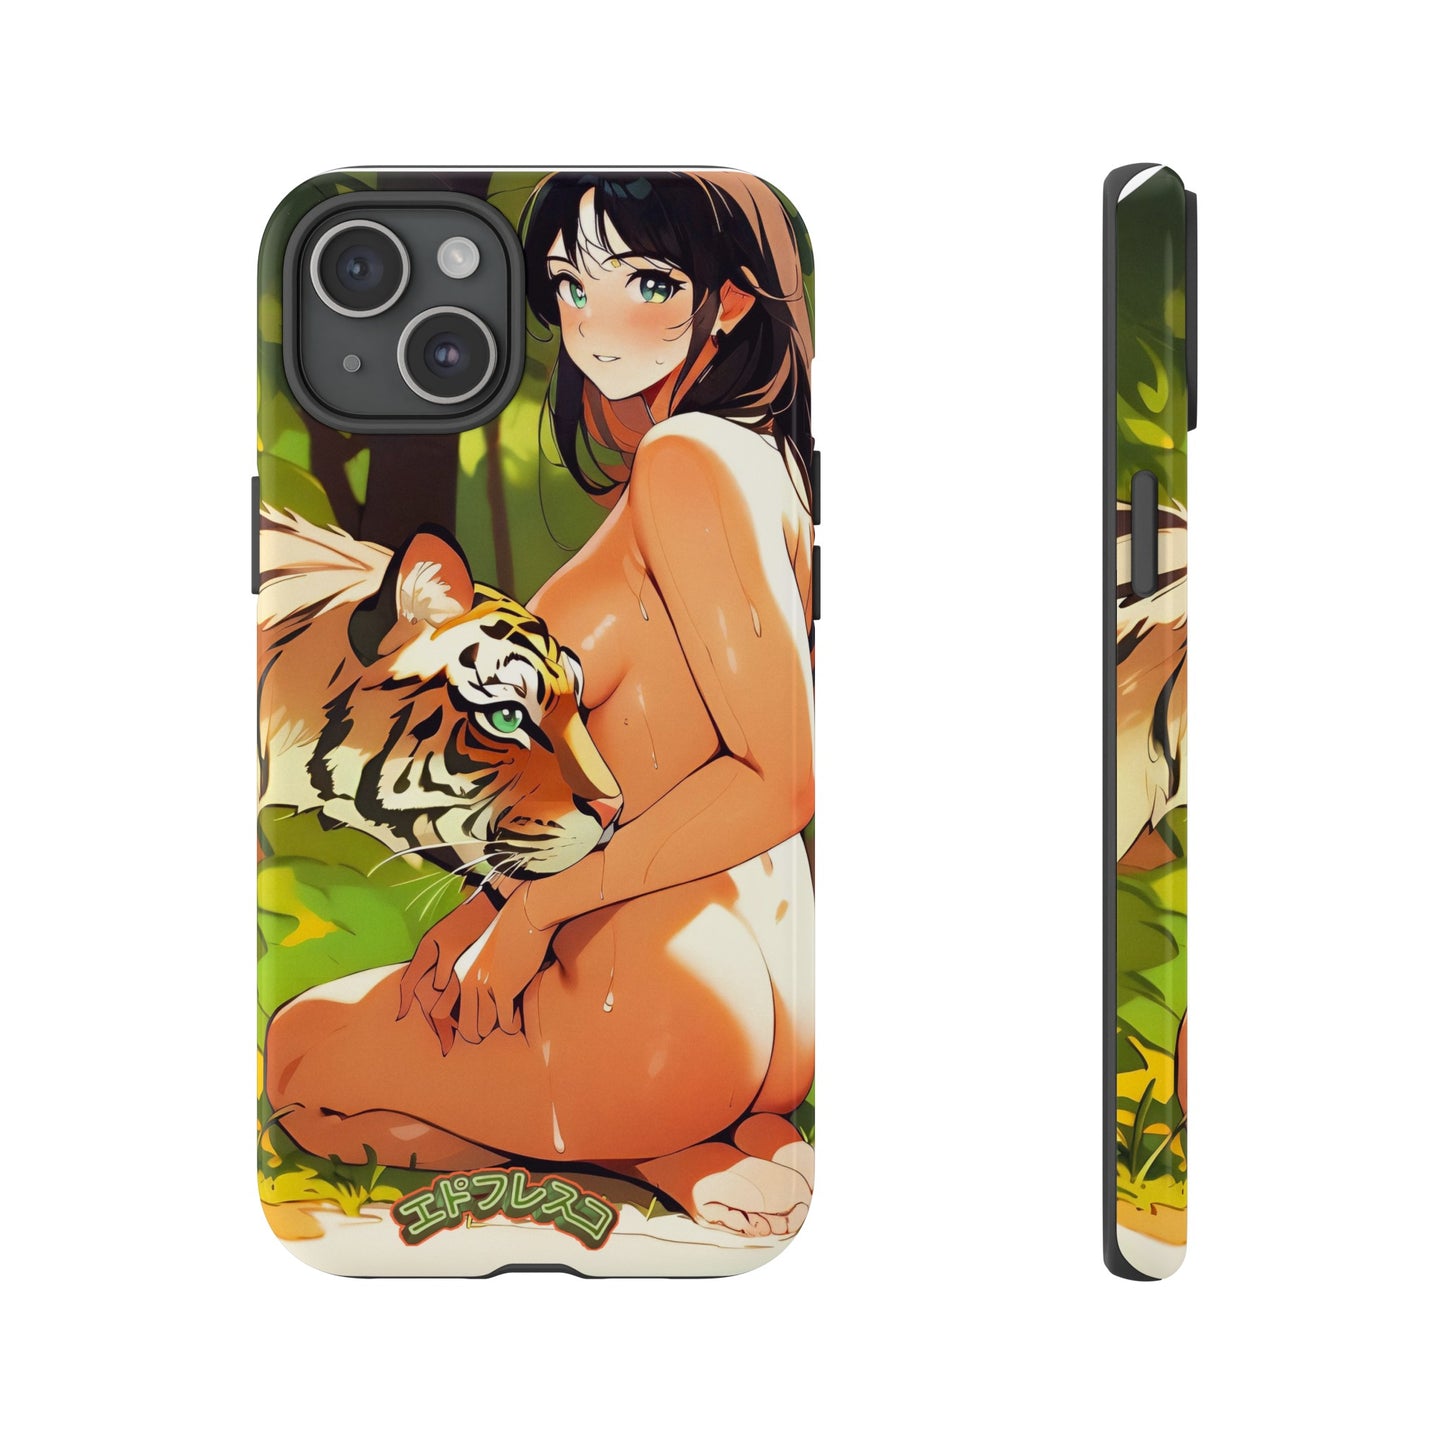 Anime Style Art Tough Cases- "Jungle Queens 2"